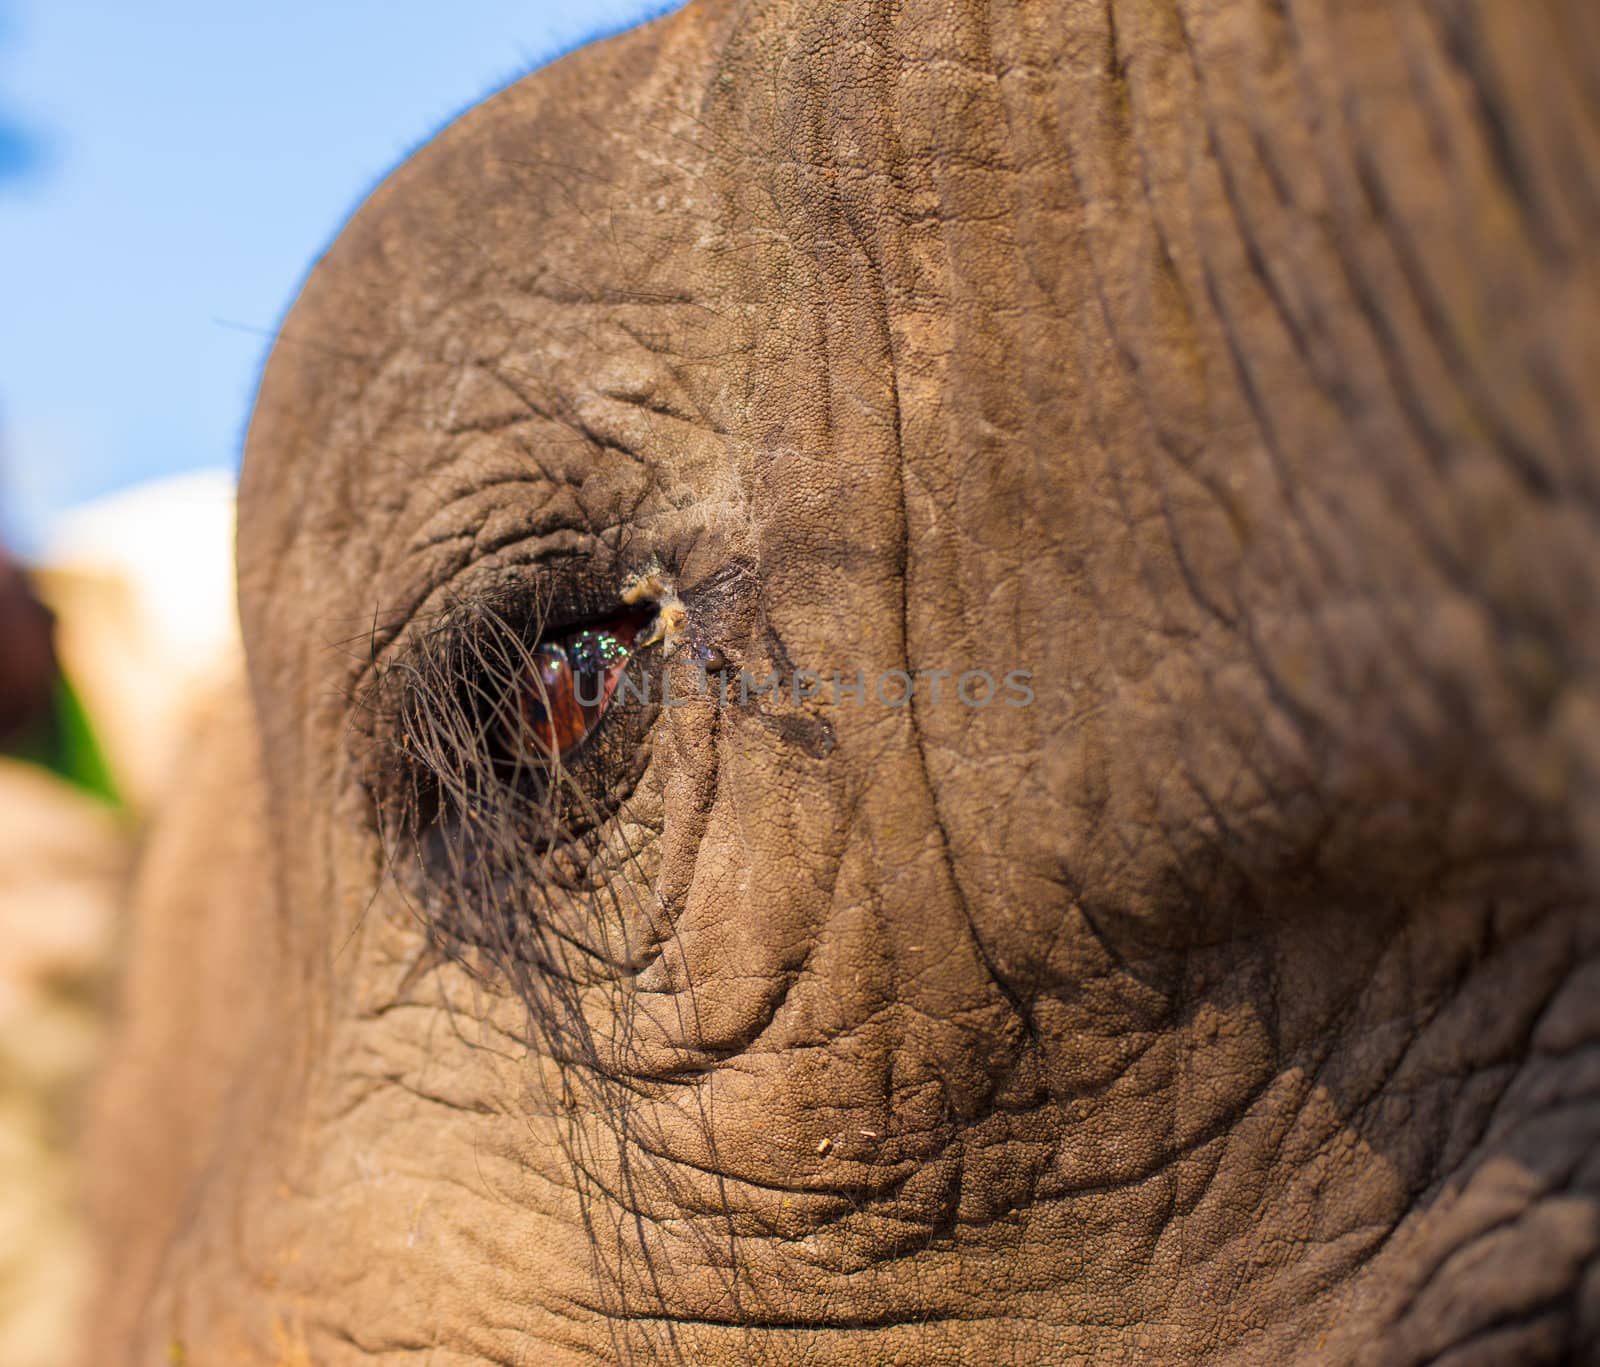 Elephant eye by edan